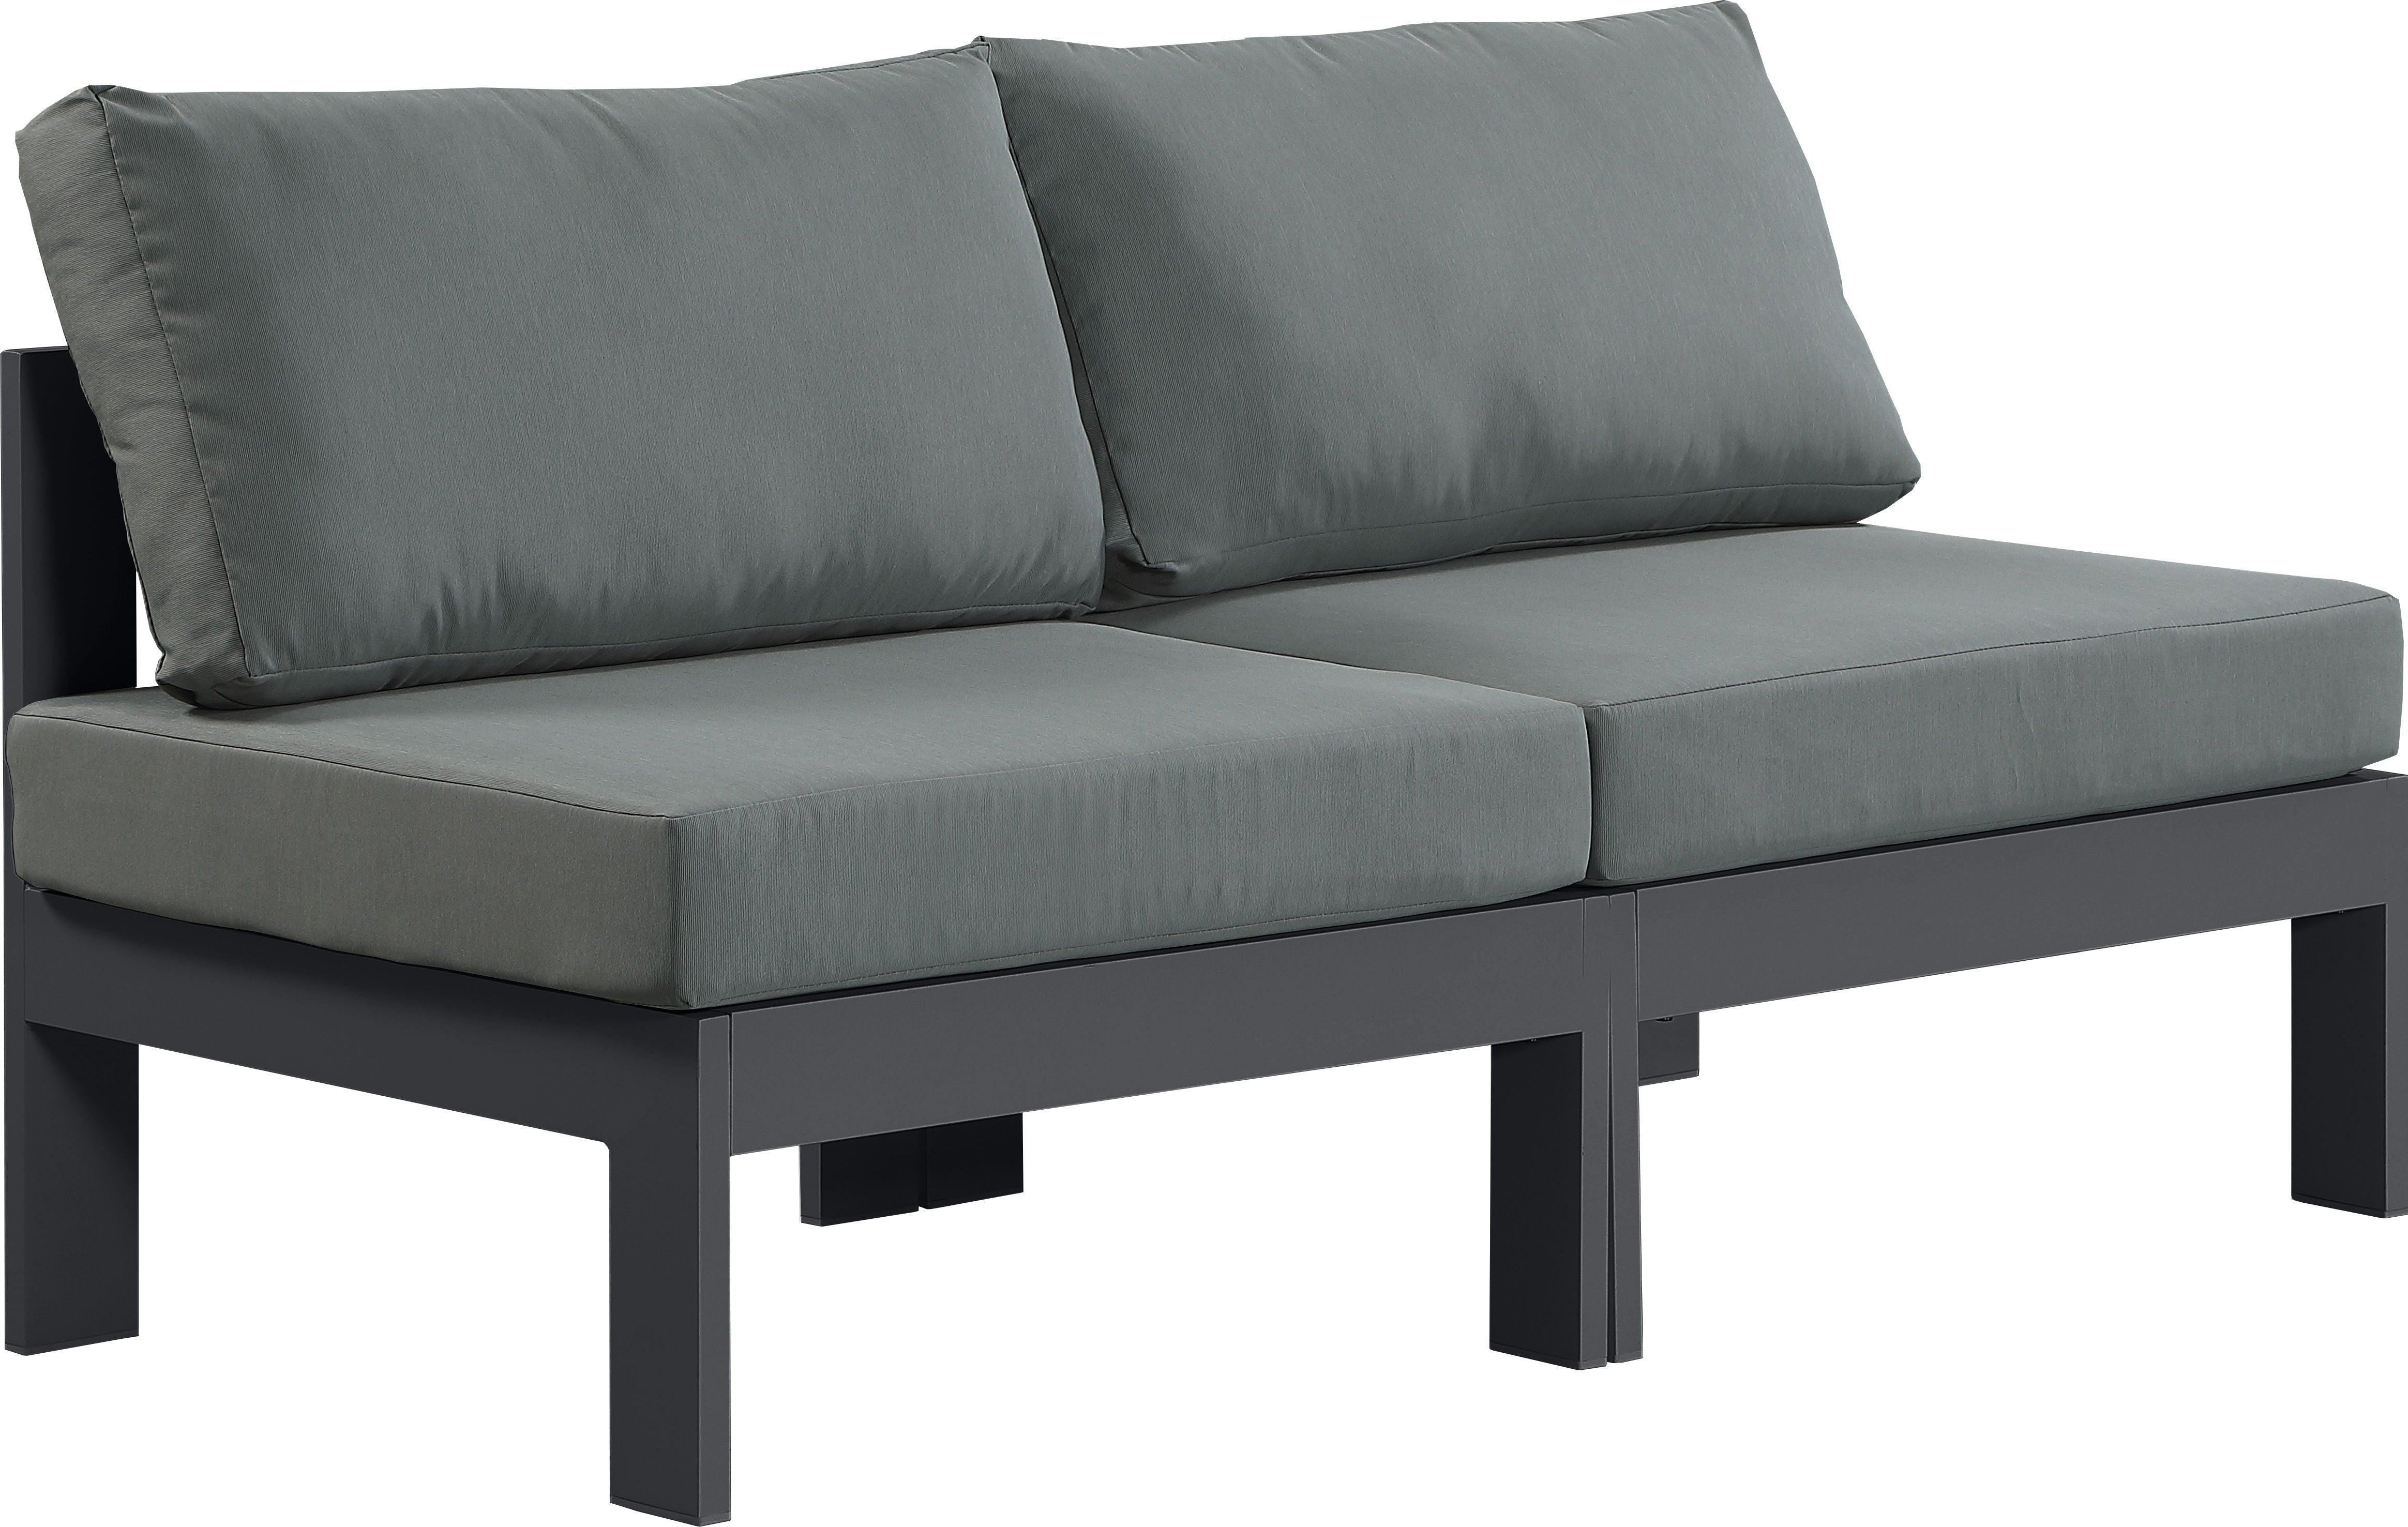 Meridian Furniture - Nizuc - Outdoor Patio Modular Sofa 2 Seats - Grey - Fabric - 5th Avenue Furniture